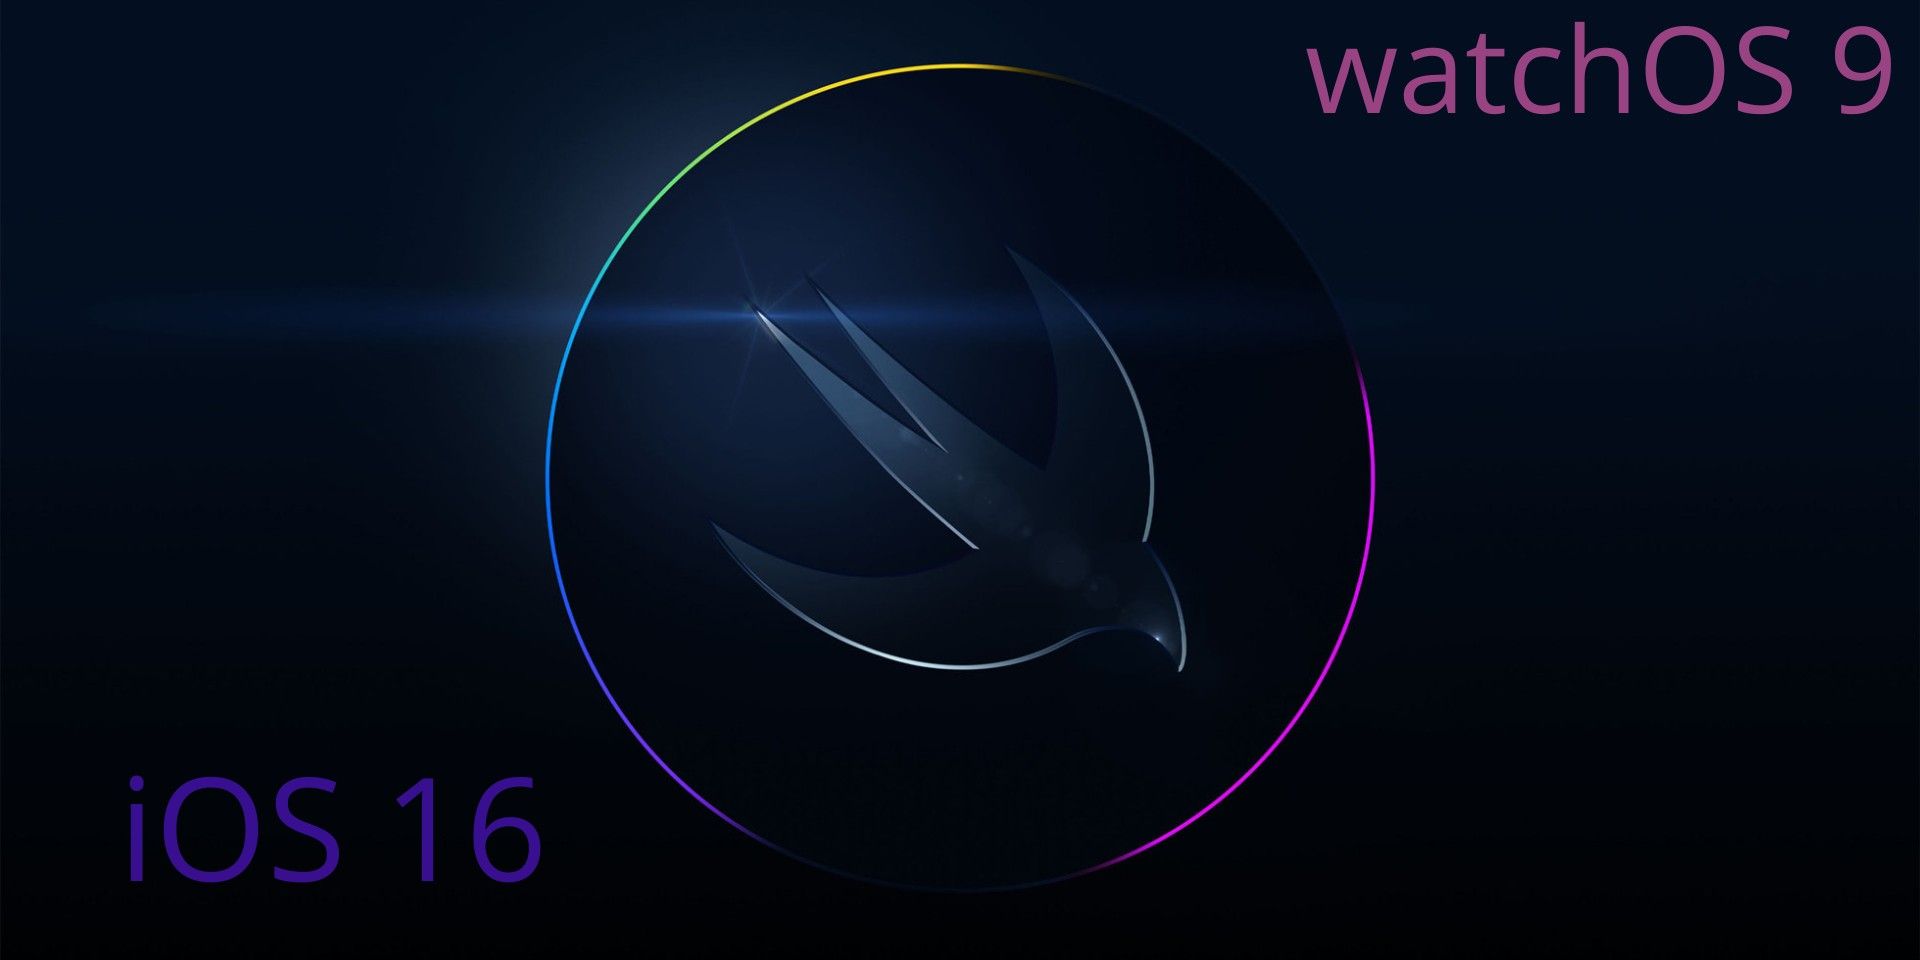 WWDC ios 16 watchos 9